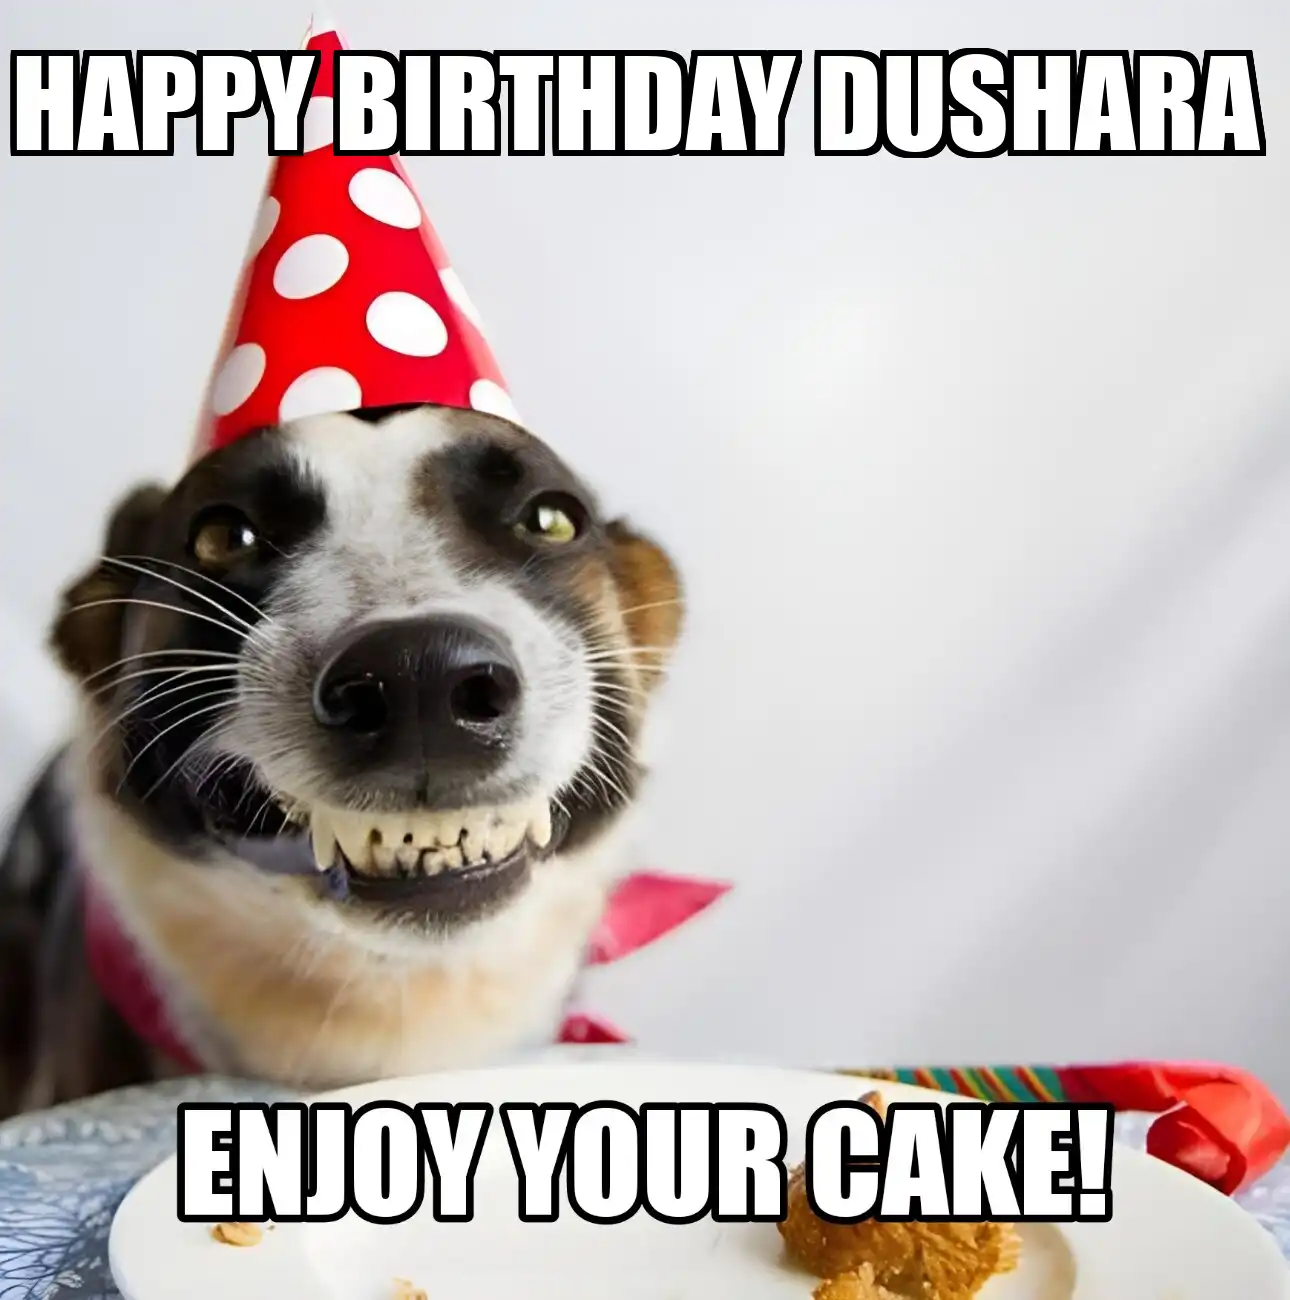 Happy Birthday Dushara Enjoy Your Cake Dog Meme